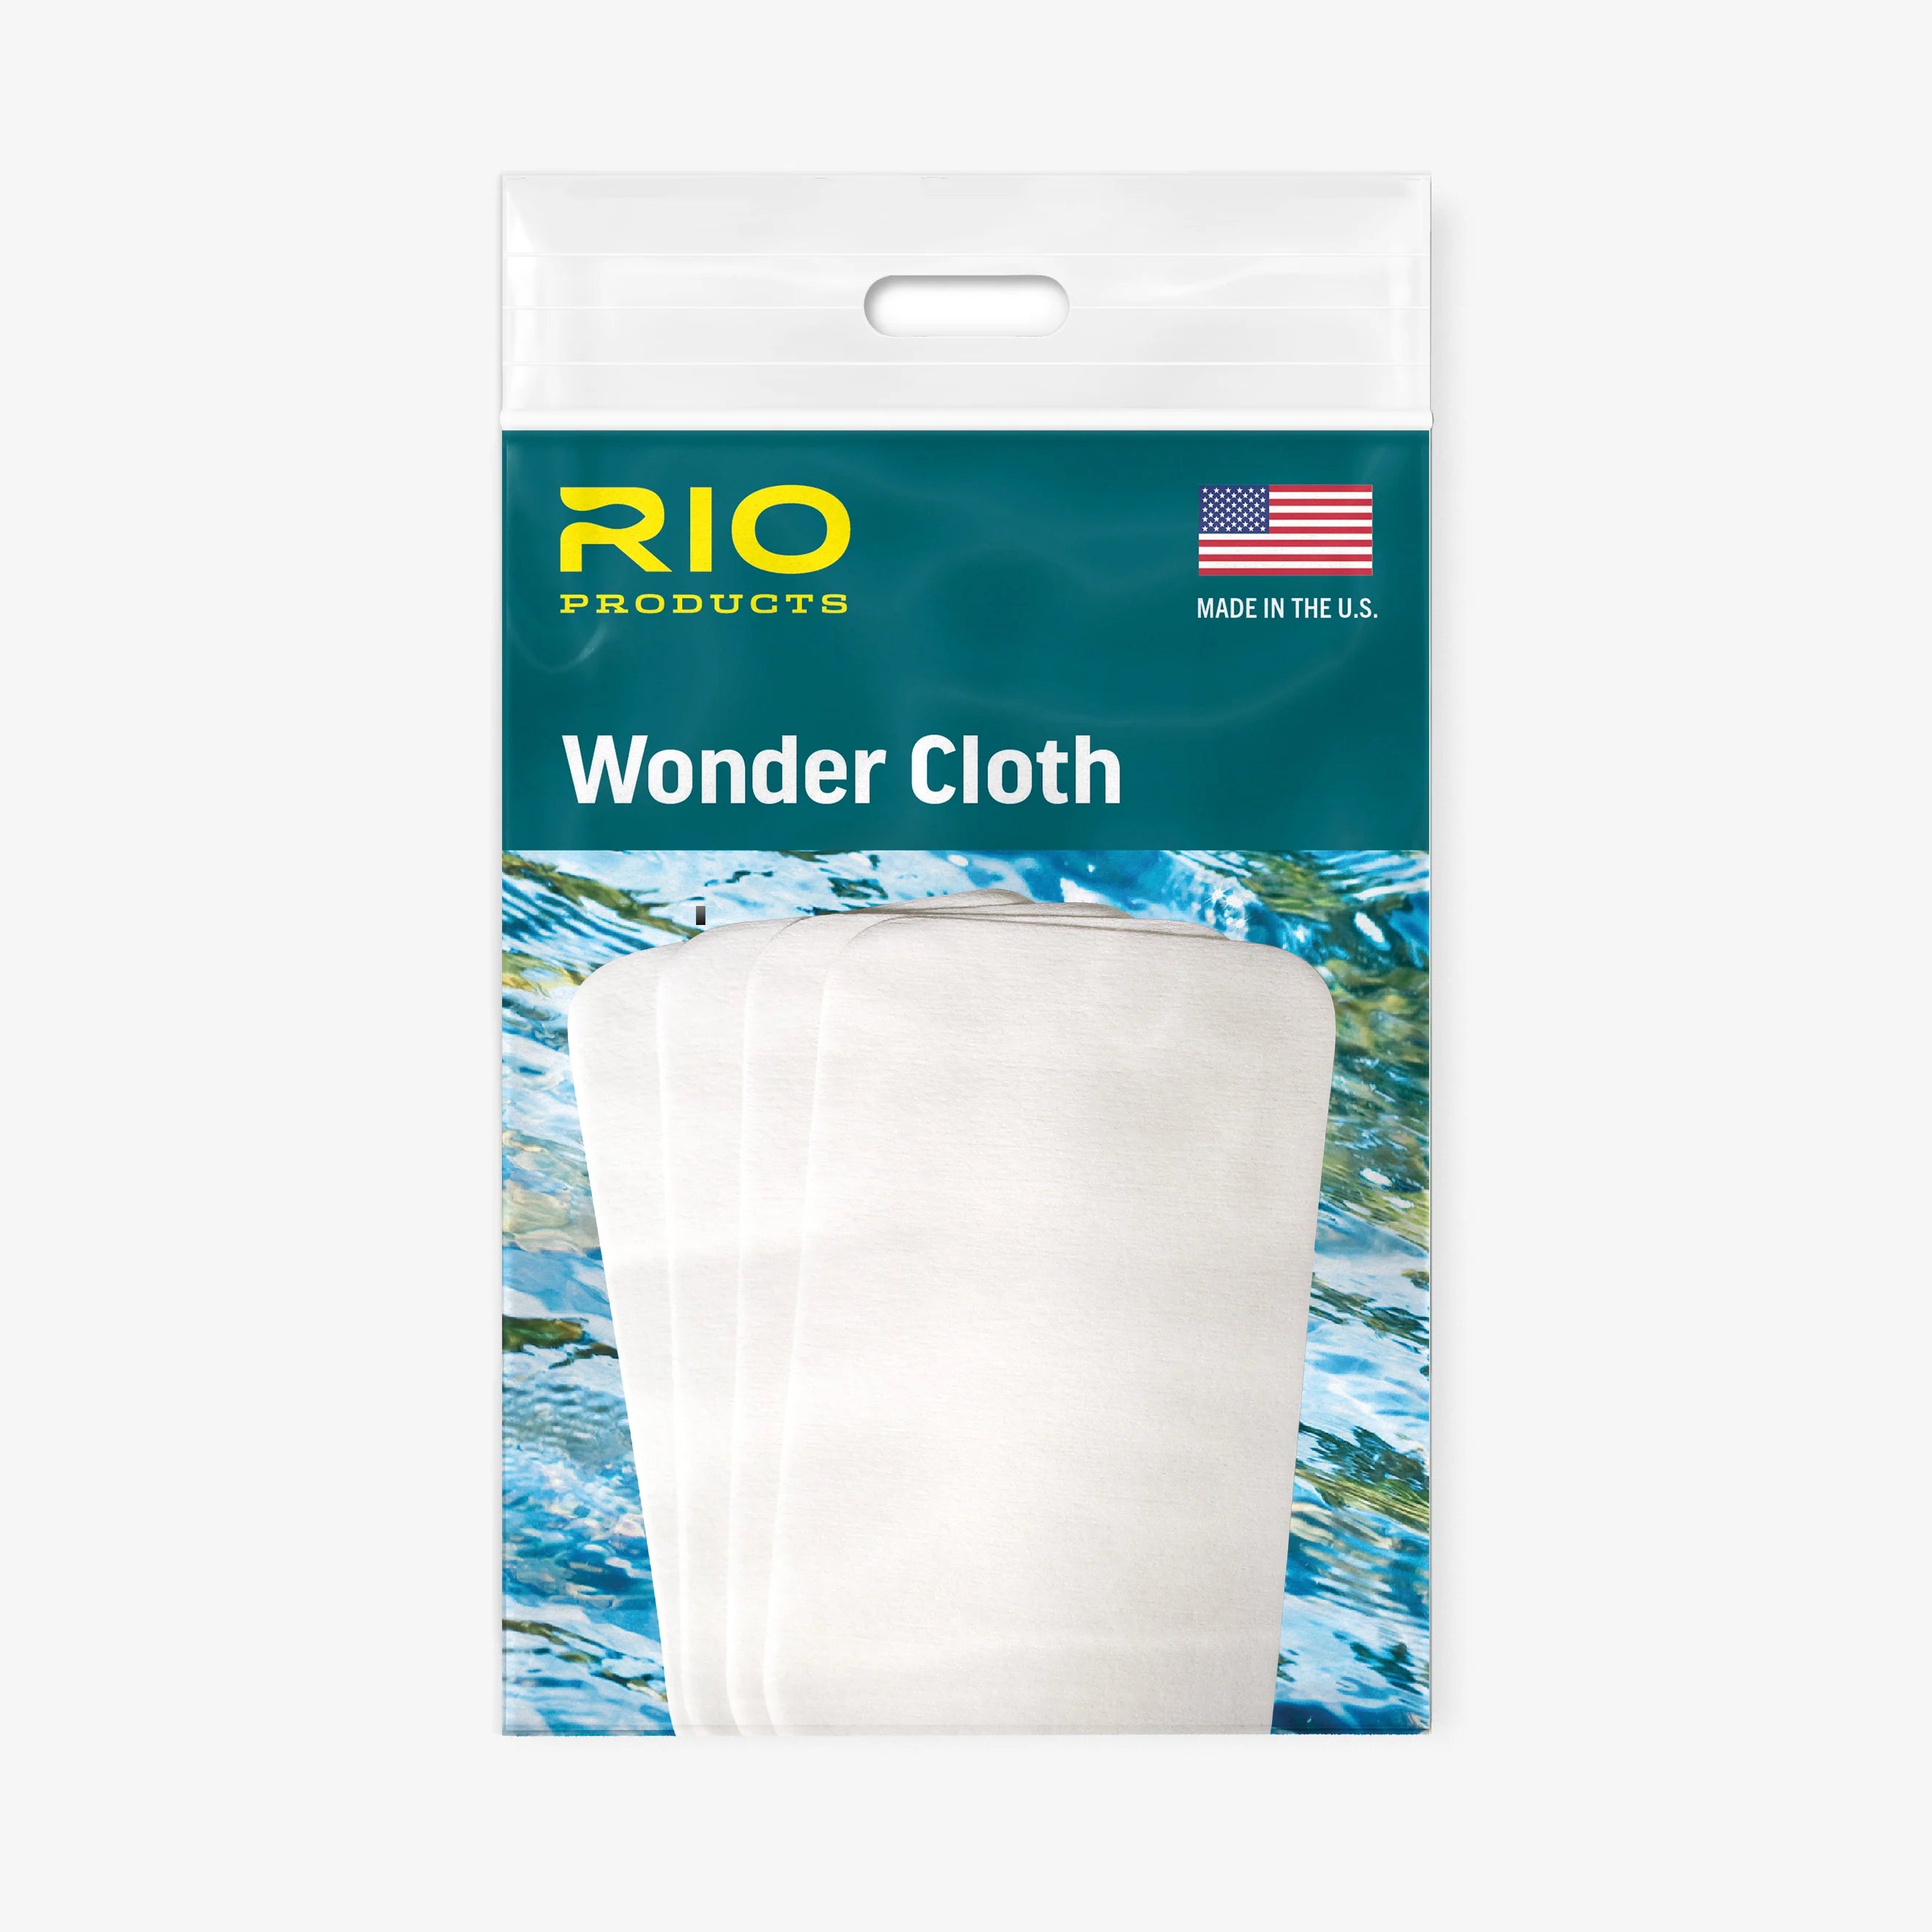 Rio Wonder Cloth - 4 Pack